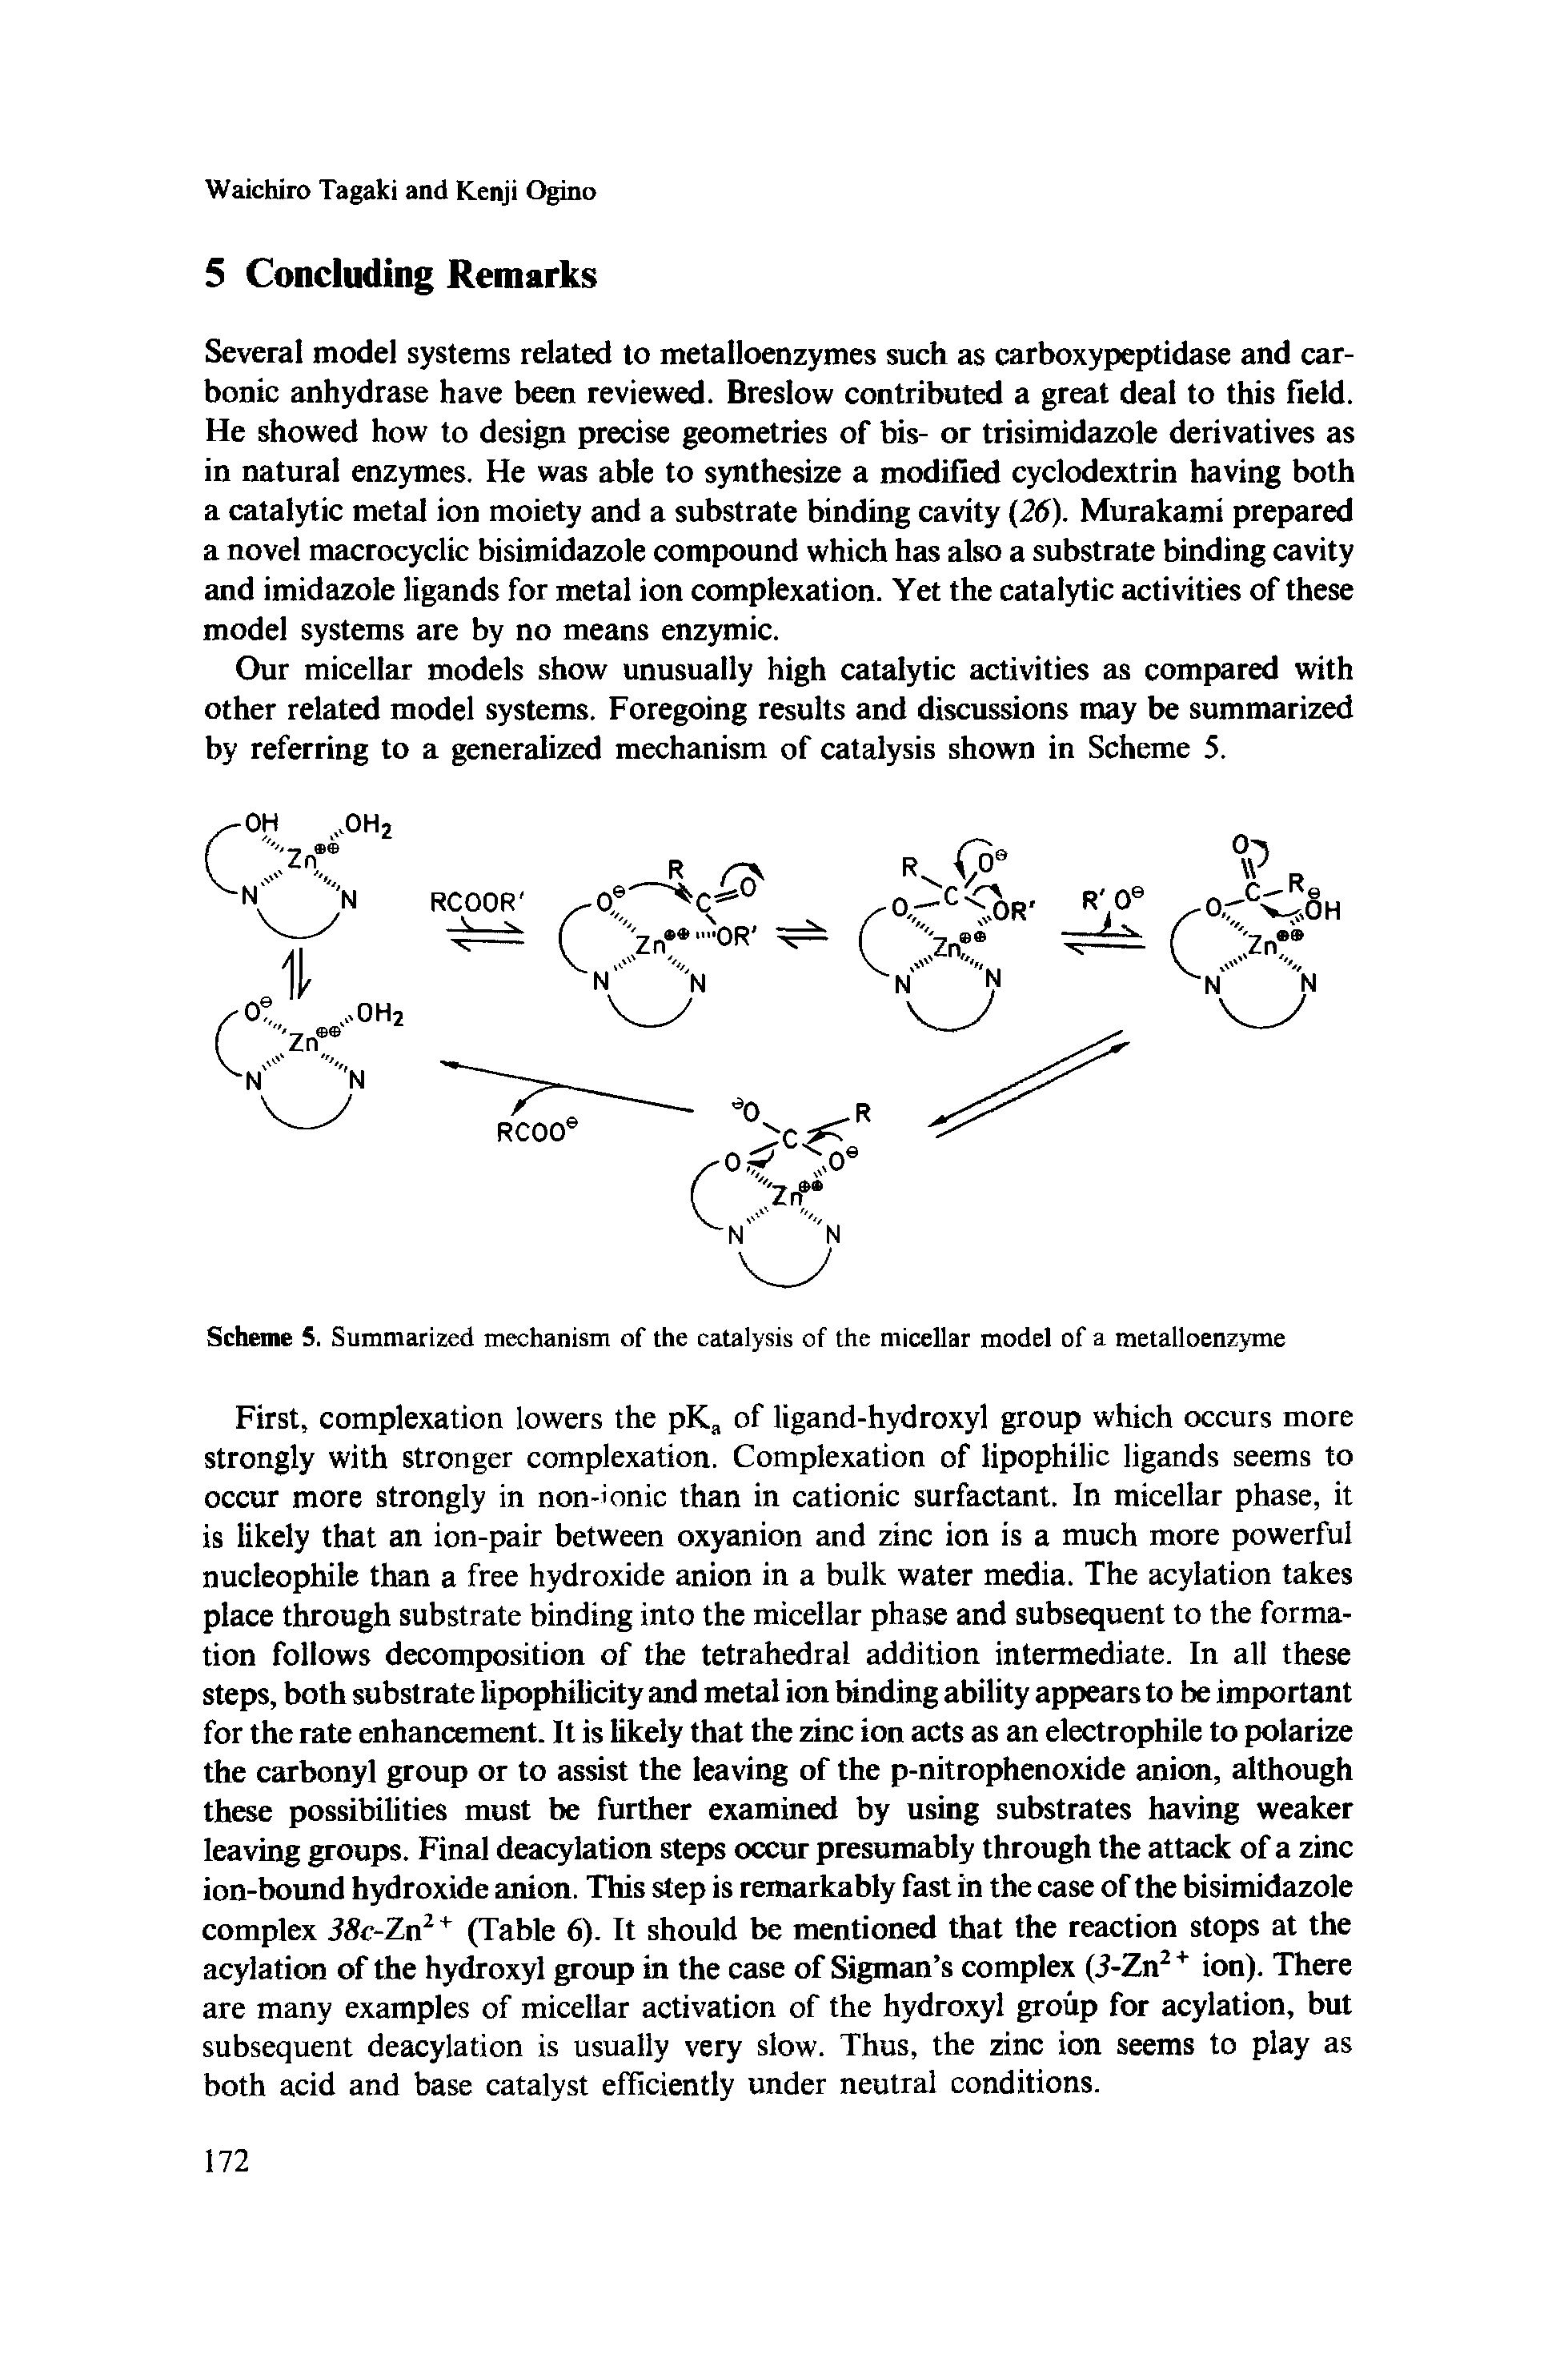 Scheme 5. Summarized mechanism of the catalysis of the micellar model of a metalloenzyme...